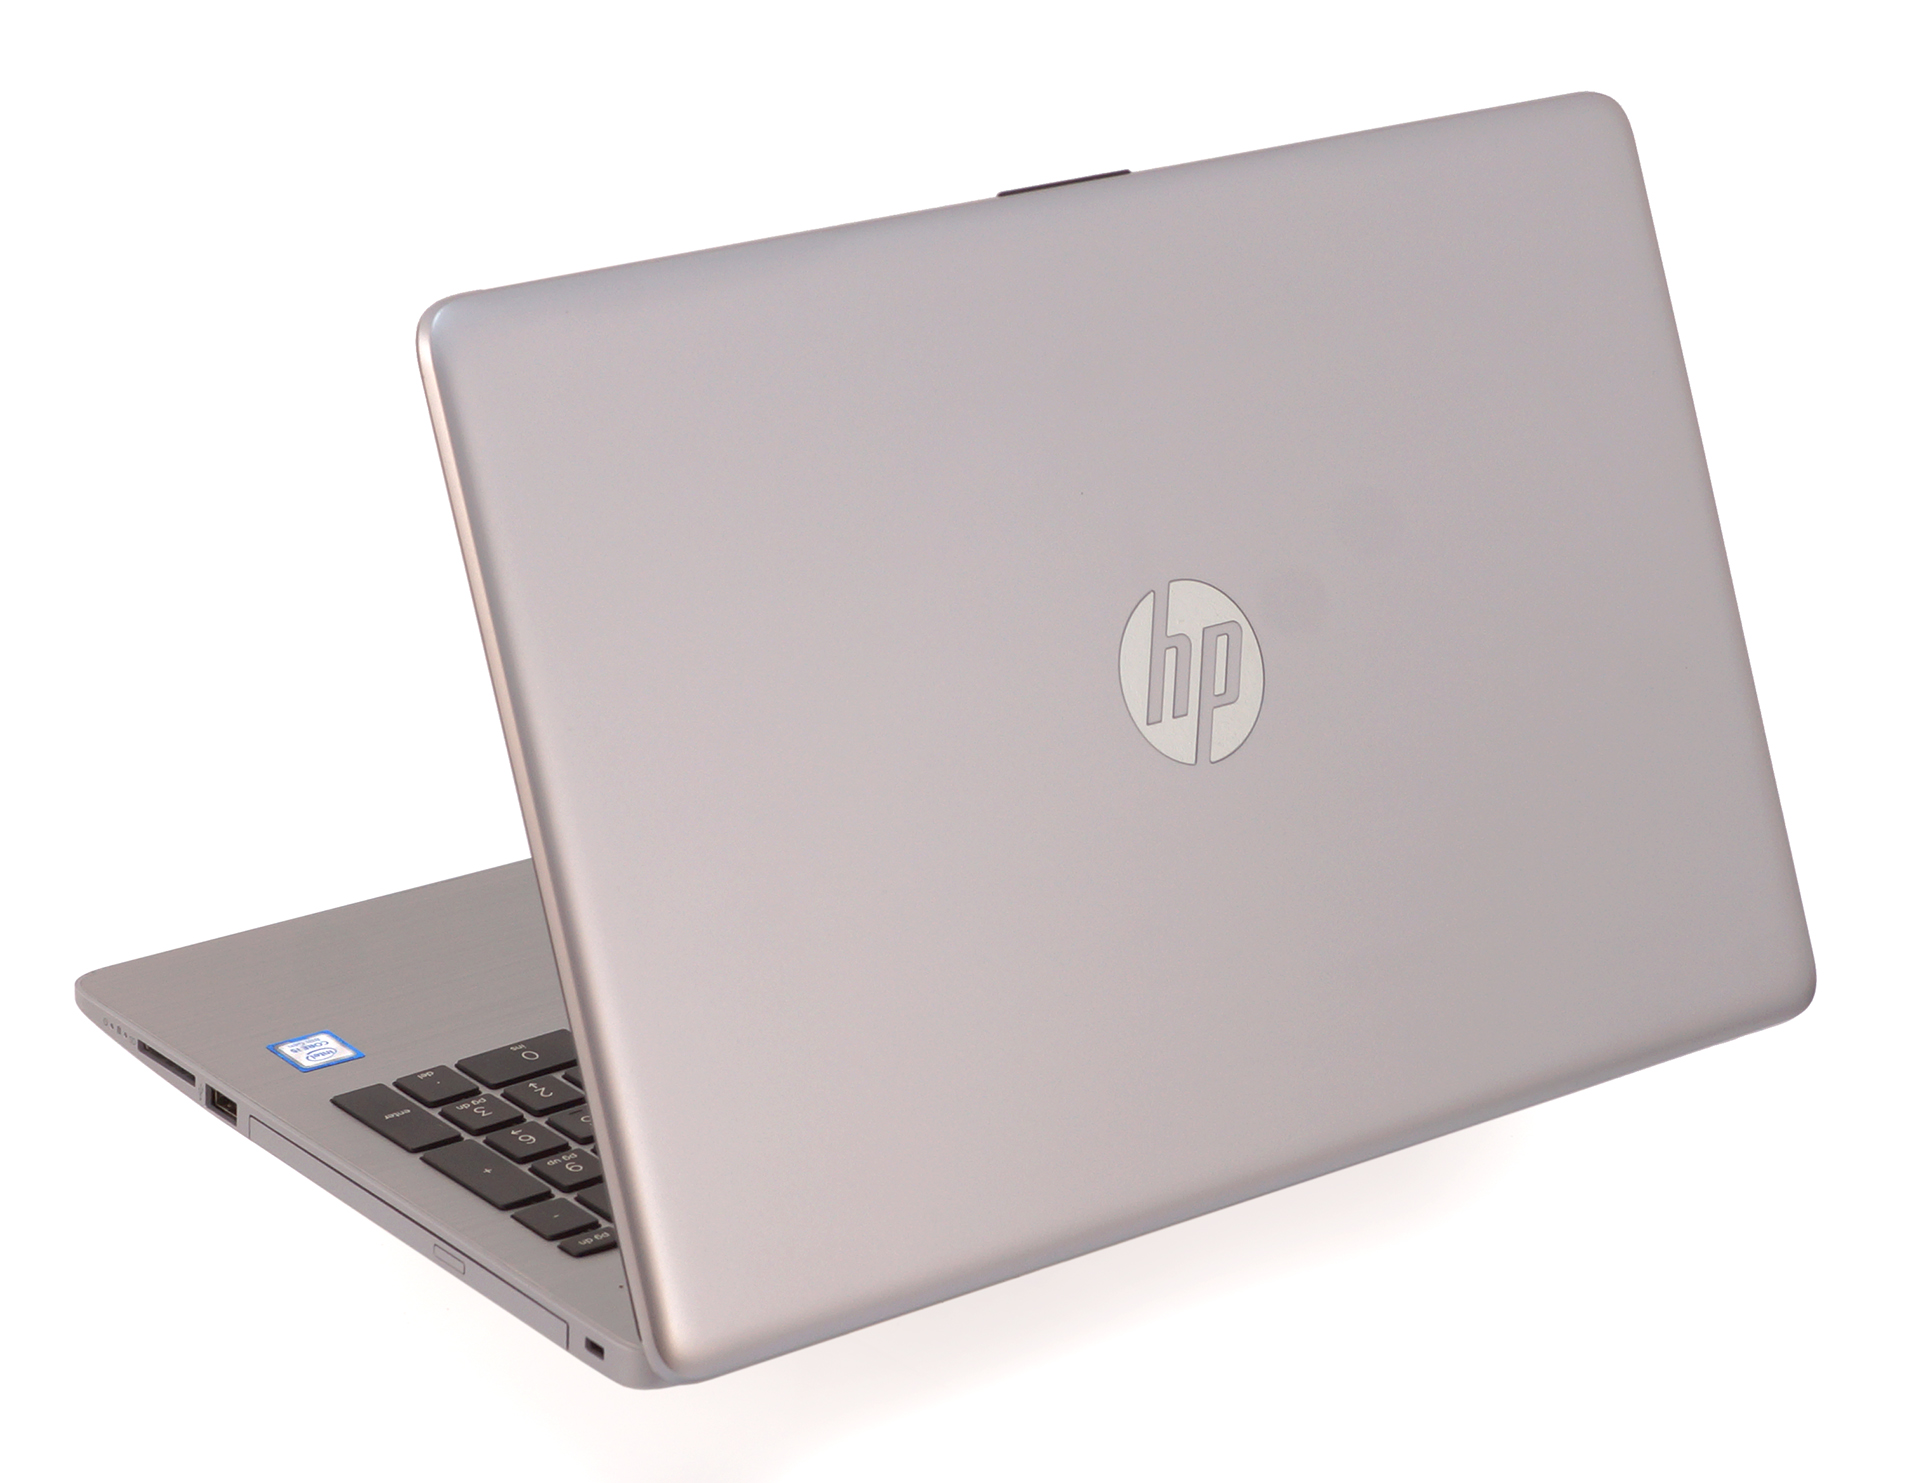 HP 250 G7 - budget notebook that satisfies | LaptopMedia.com